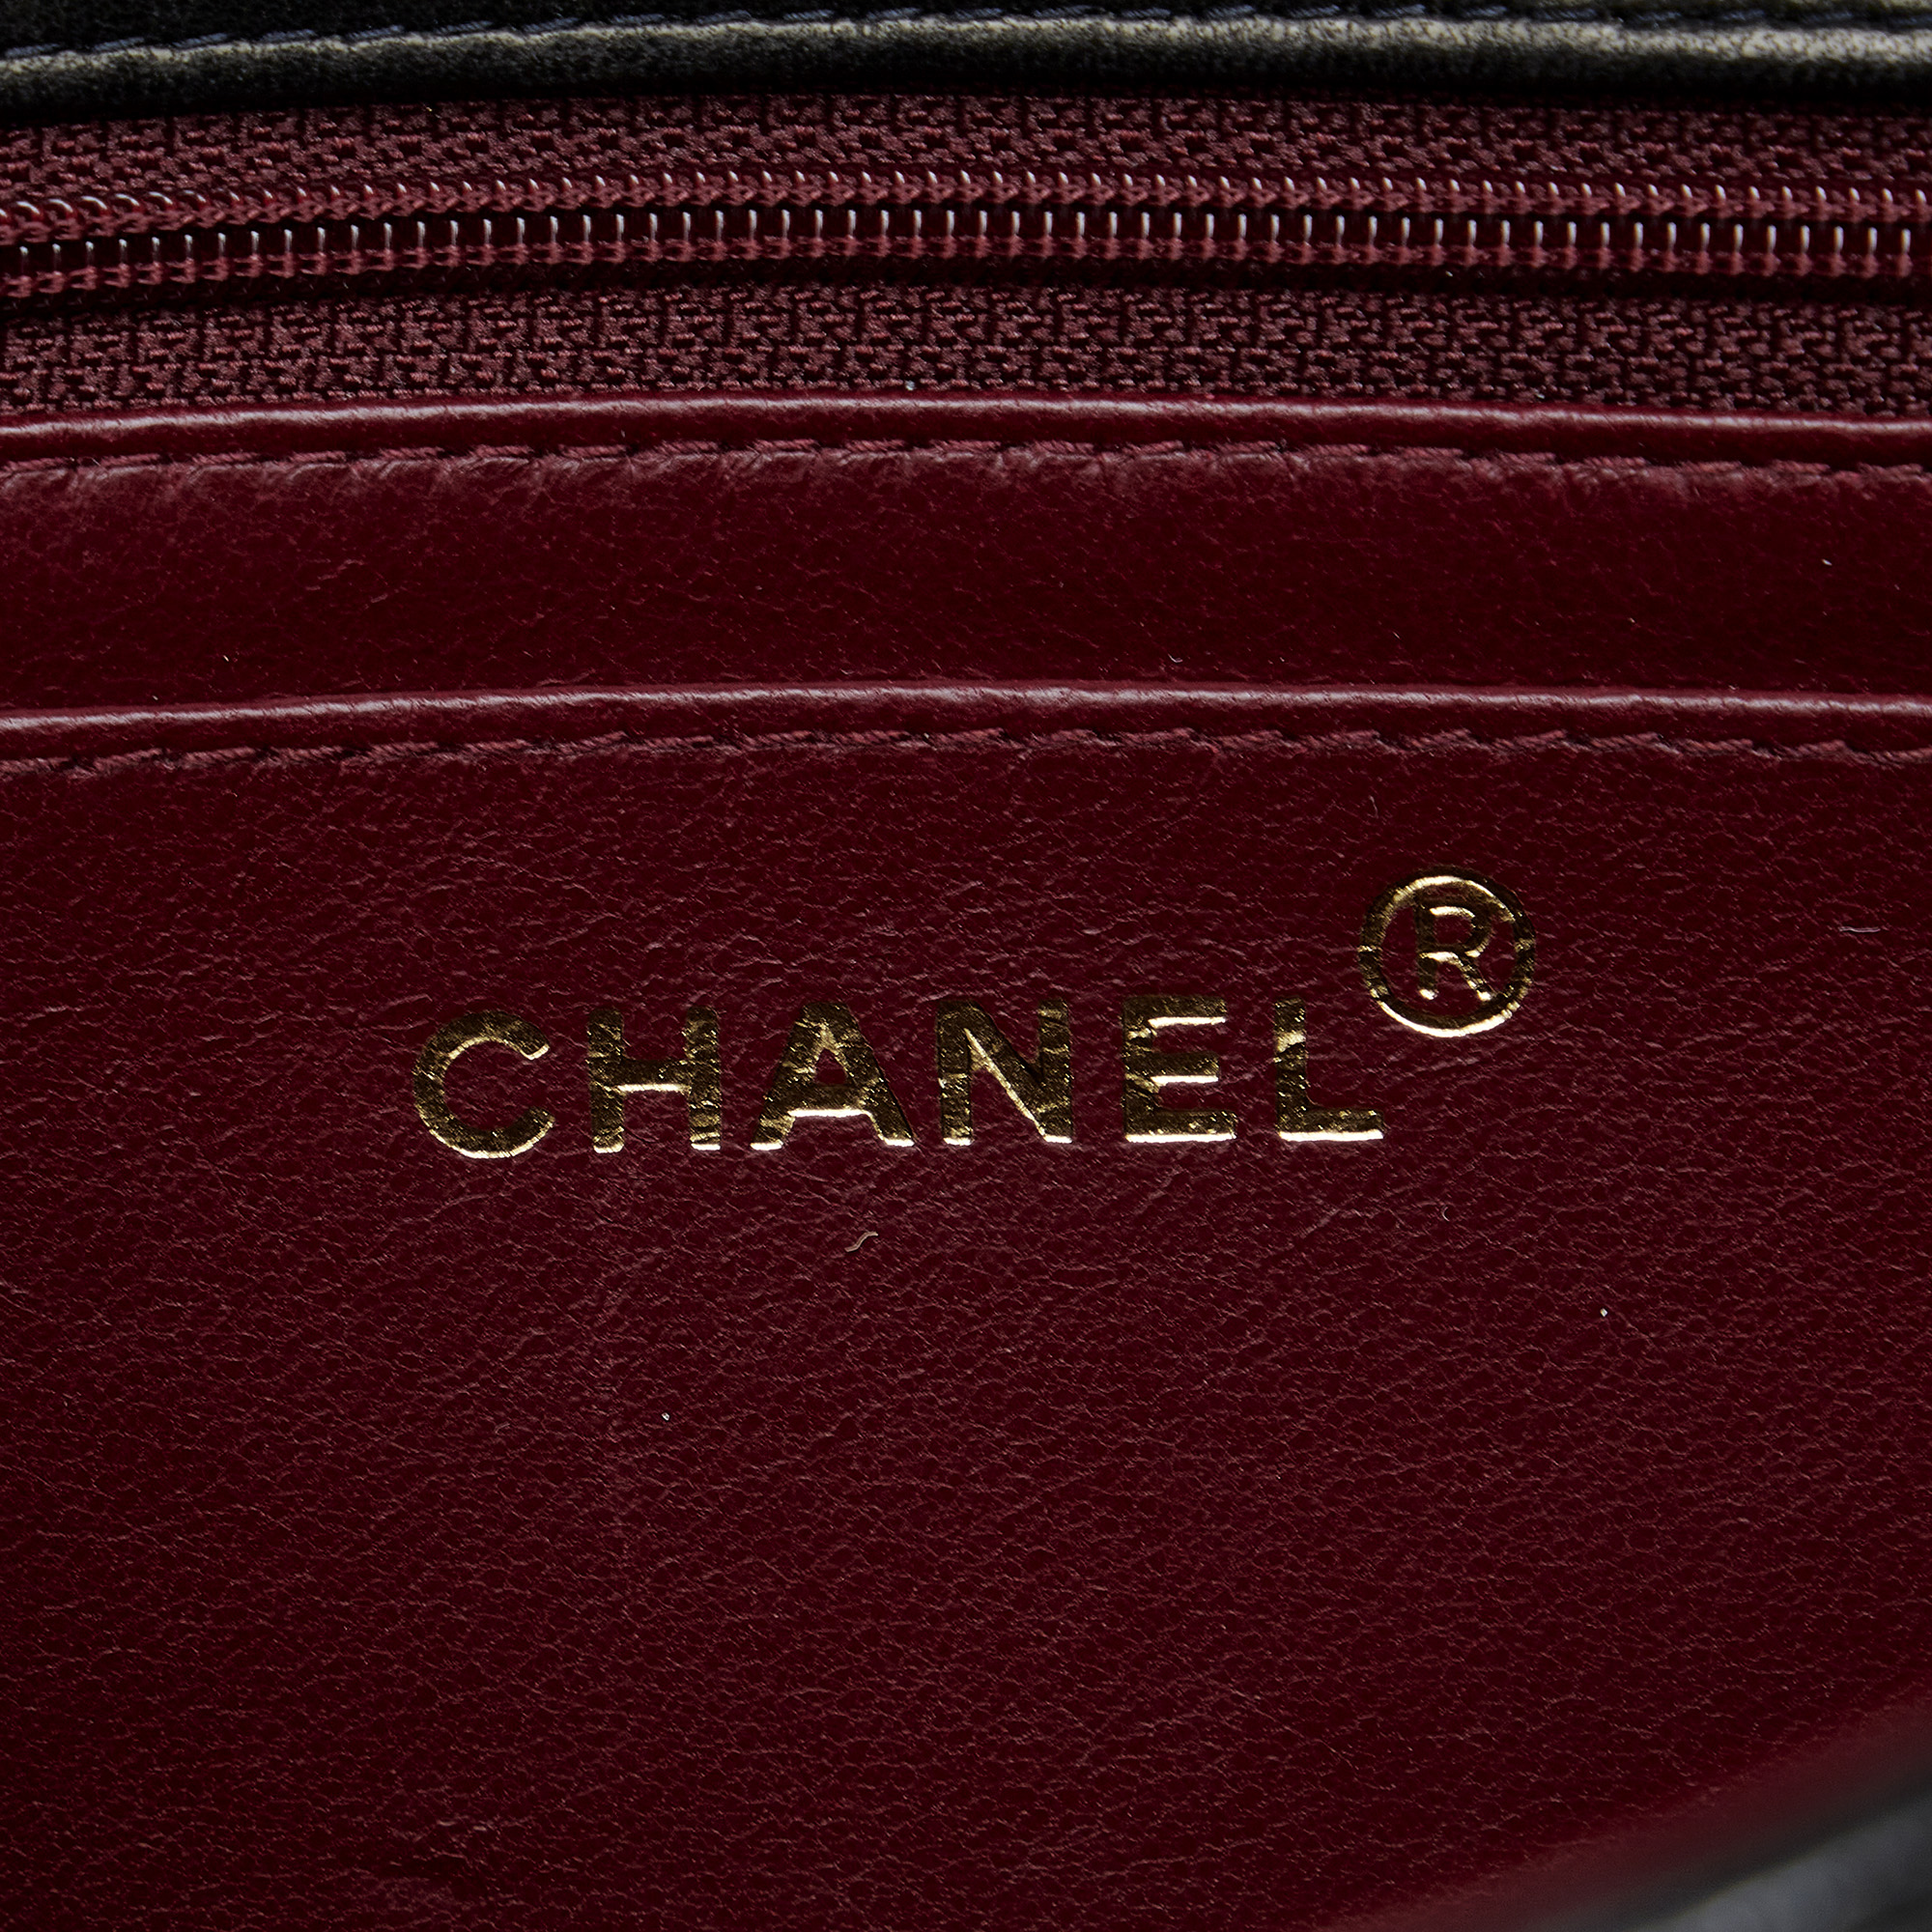 Chanel Black Medium Classic Lambskin Kelly Flap Bag